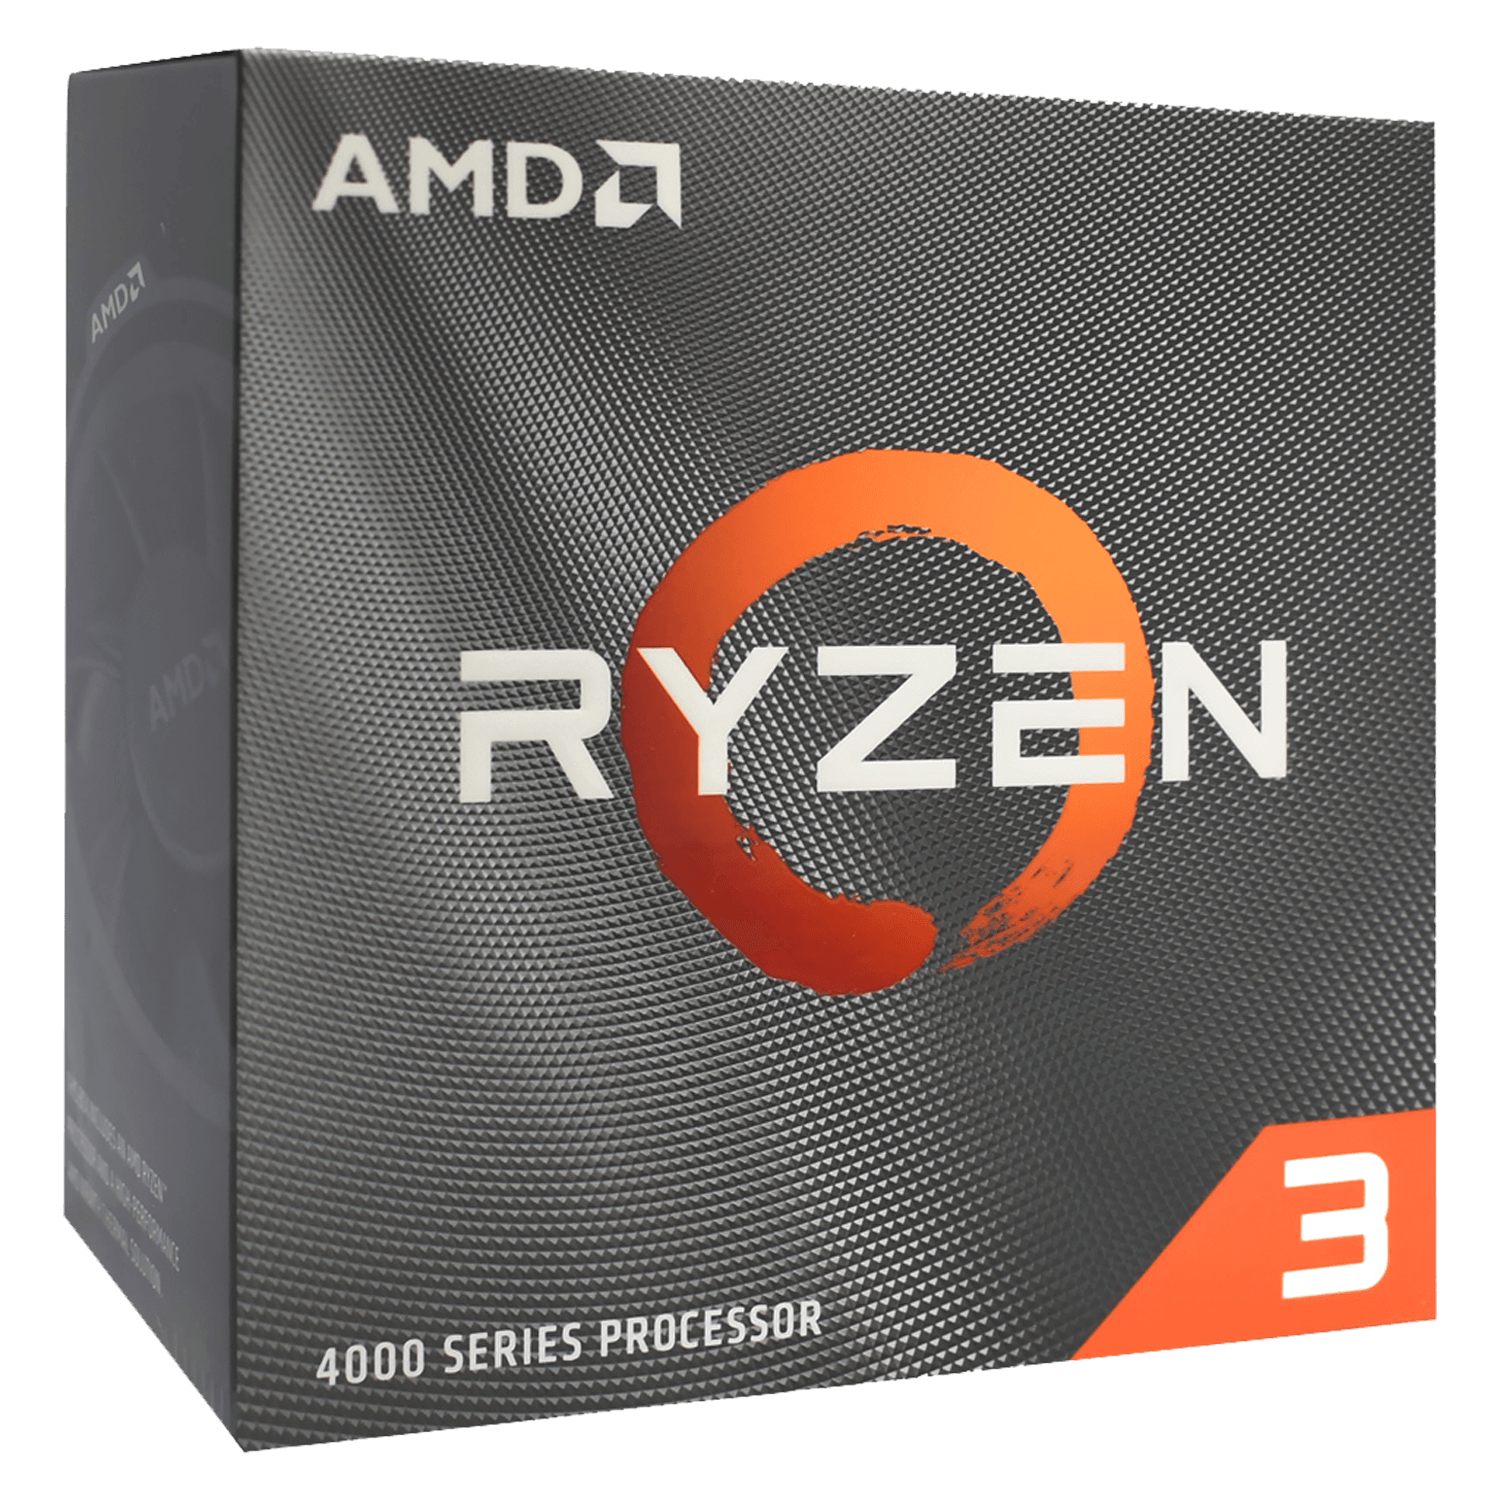 Processador AMD Ryzen 3 4100 Socket AM4 4 Core 8 Threads 3.8GHz e 4.0GHz Turbo Cache 6MB